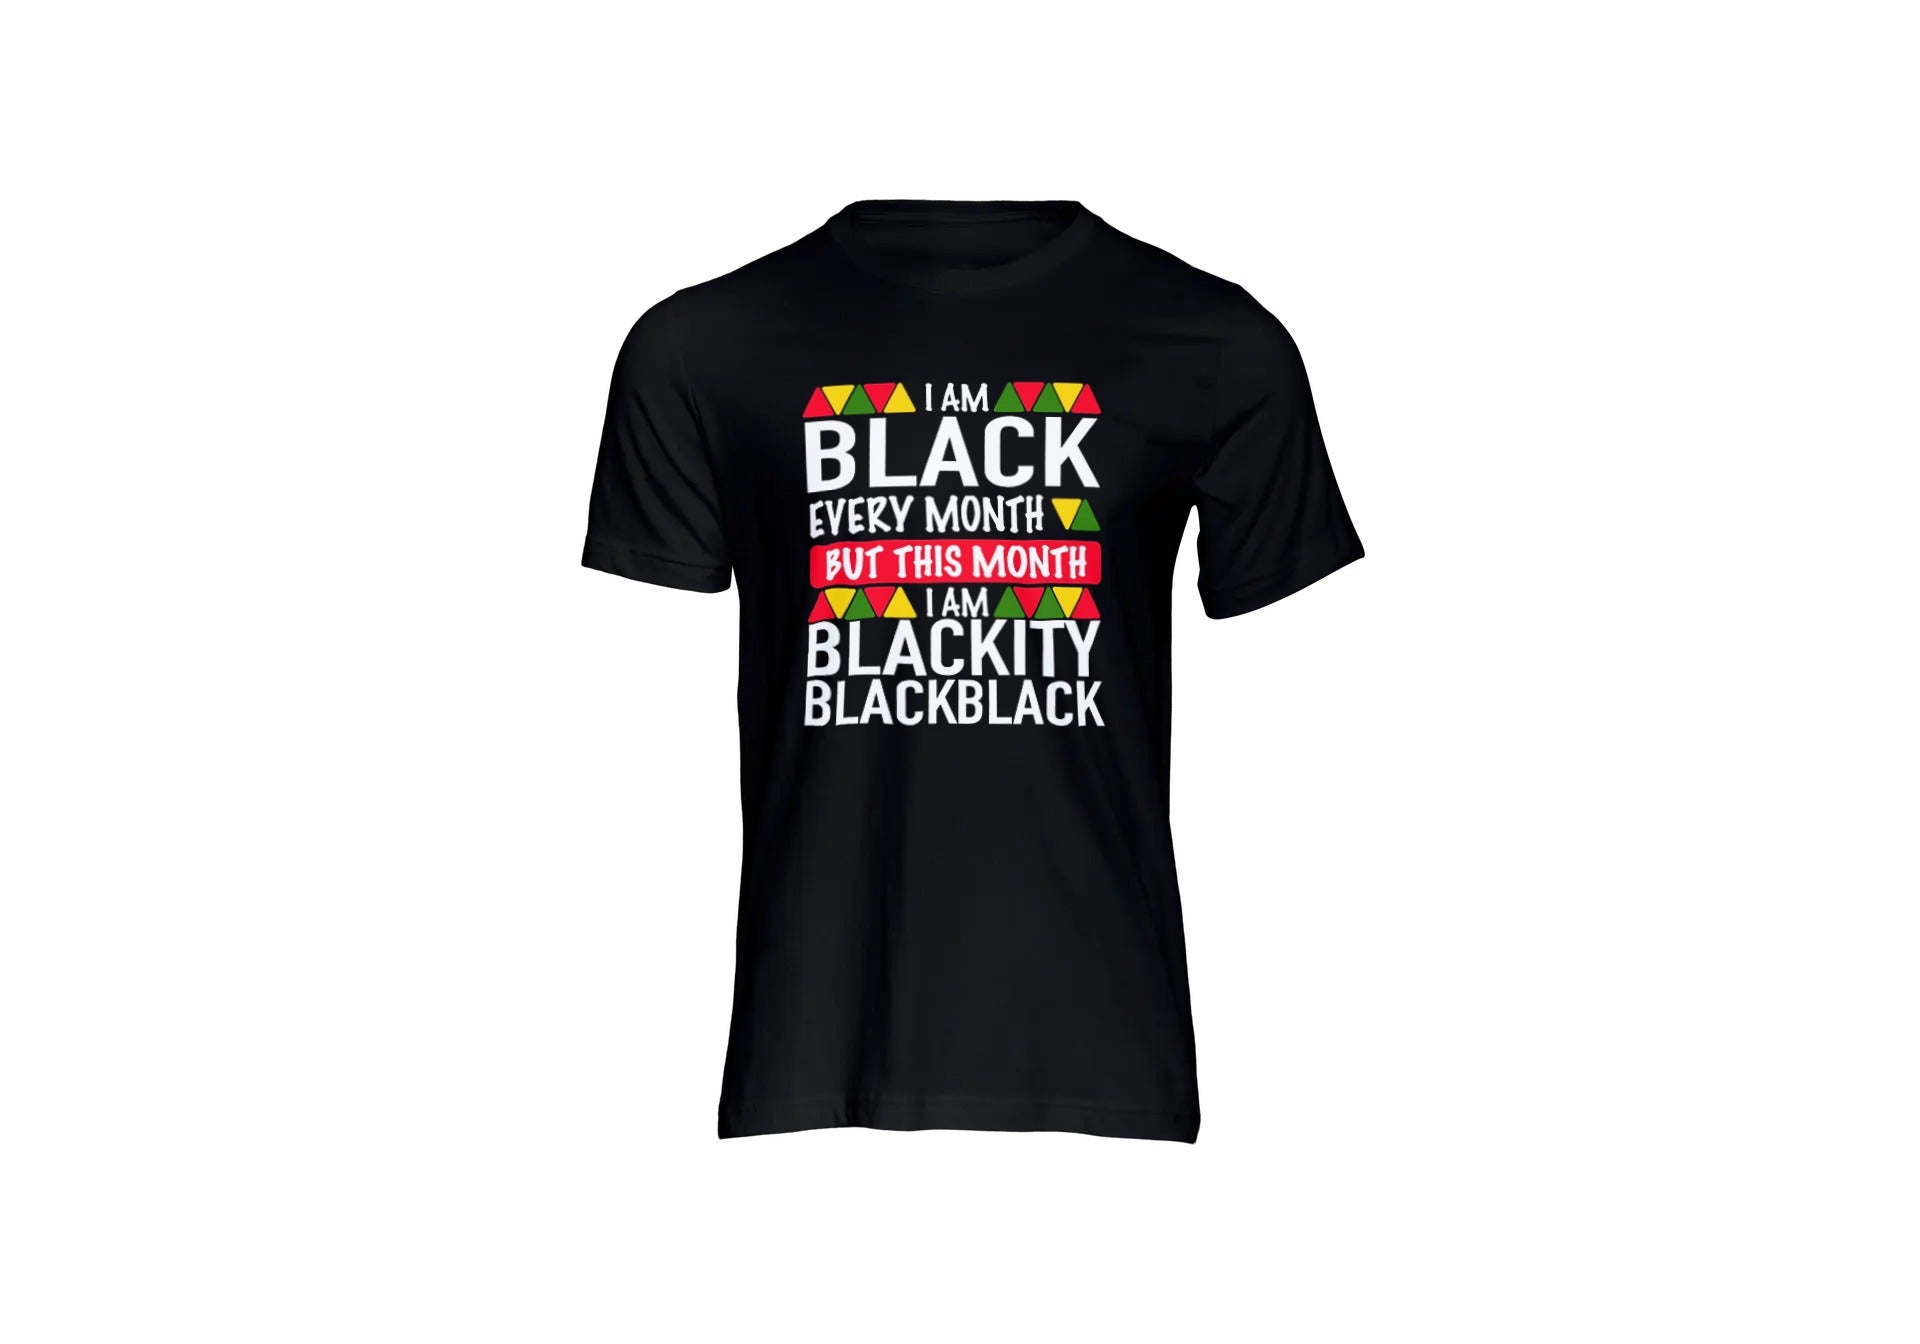 Blackity Black Black Tee